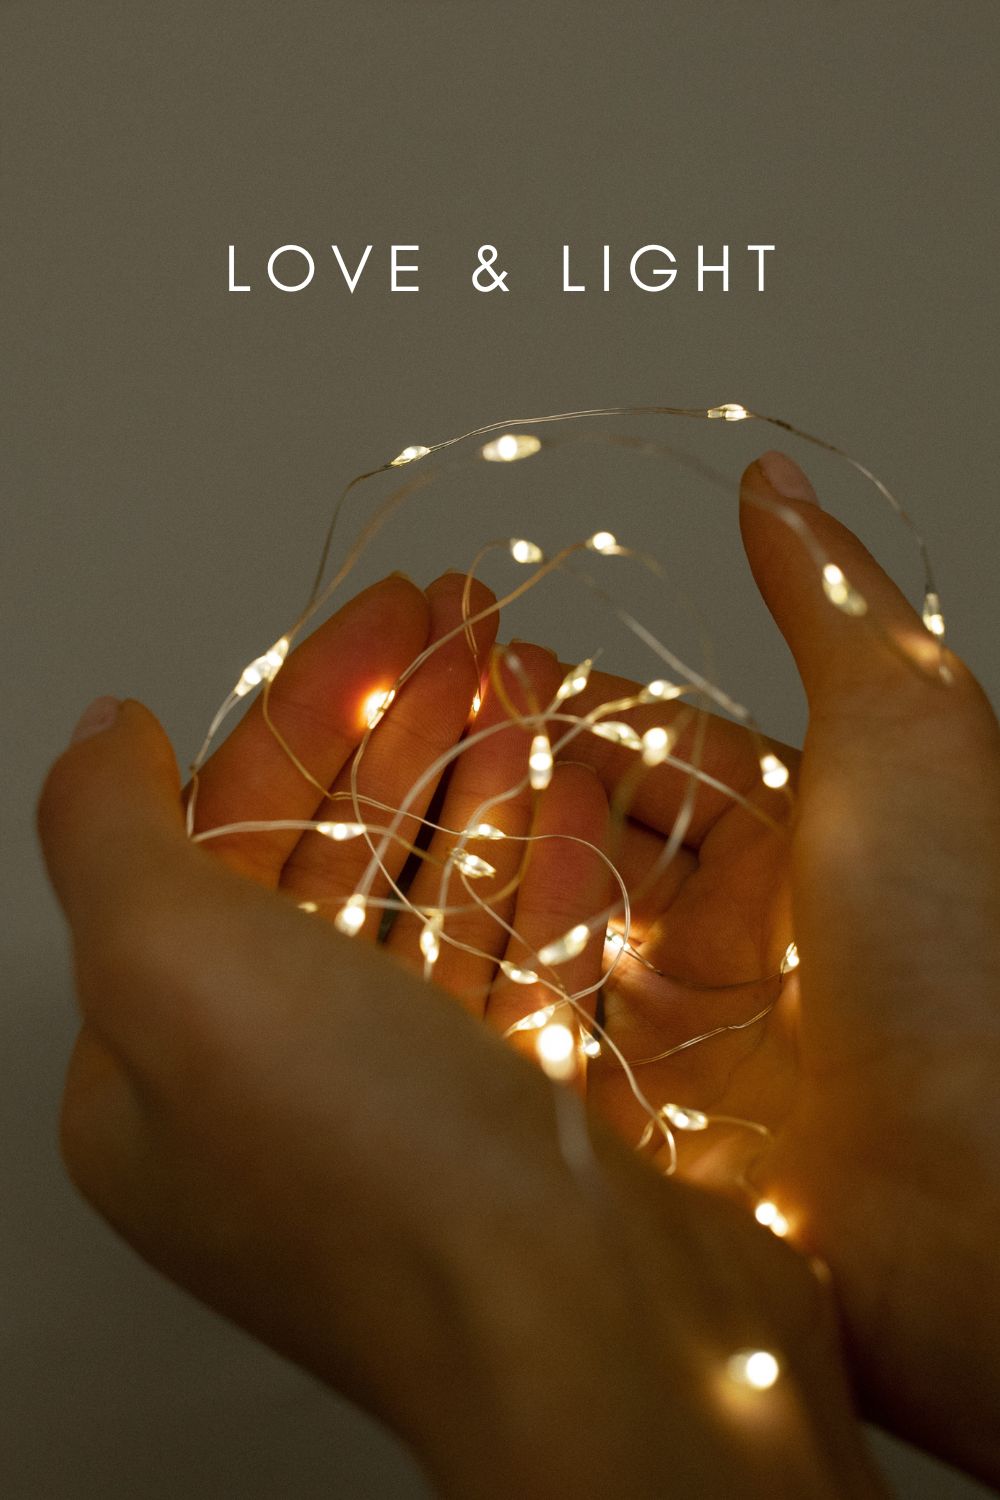 LOVE & LIGHT